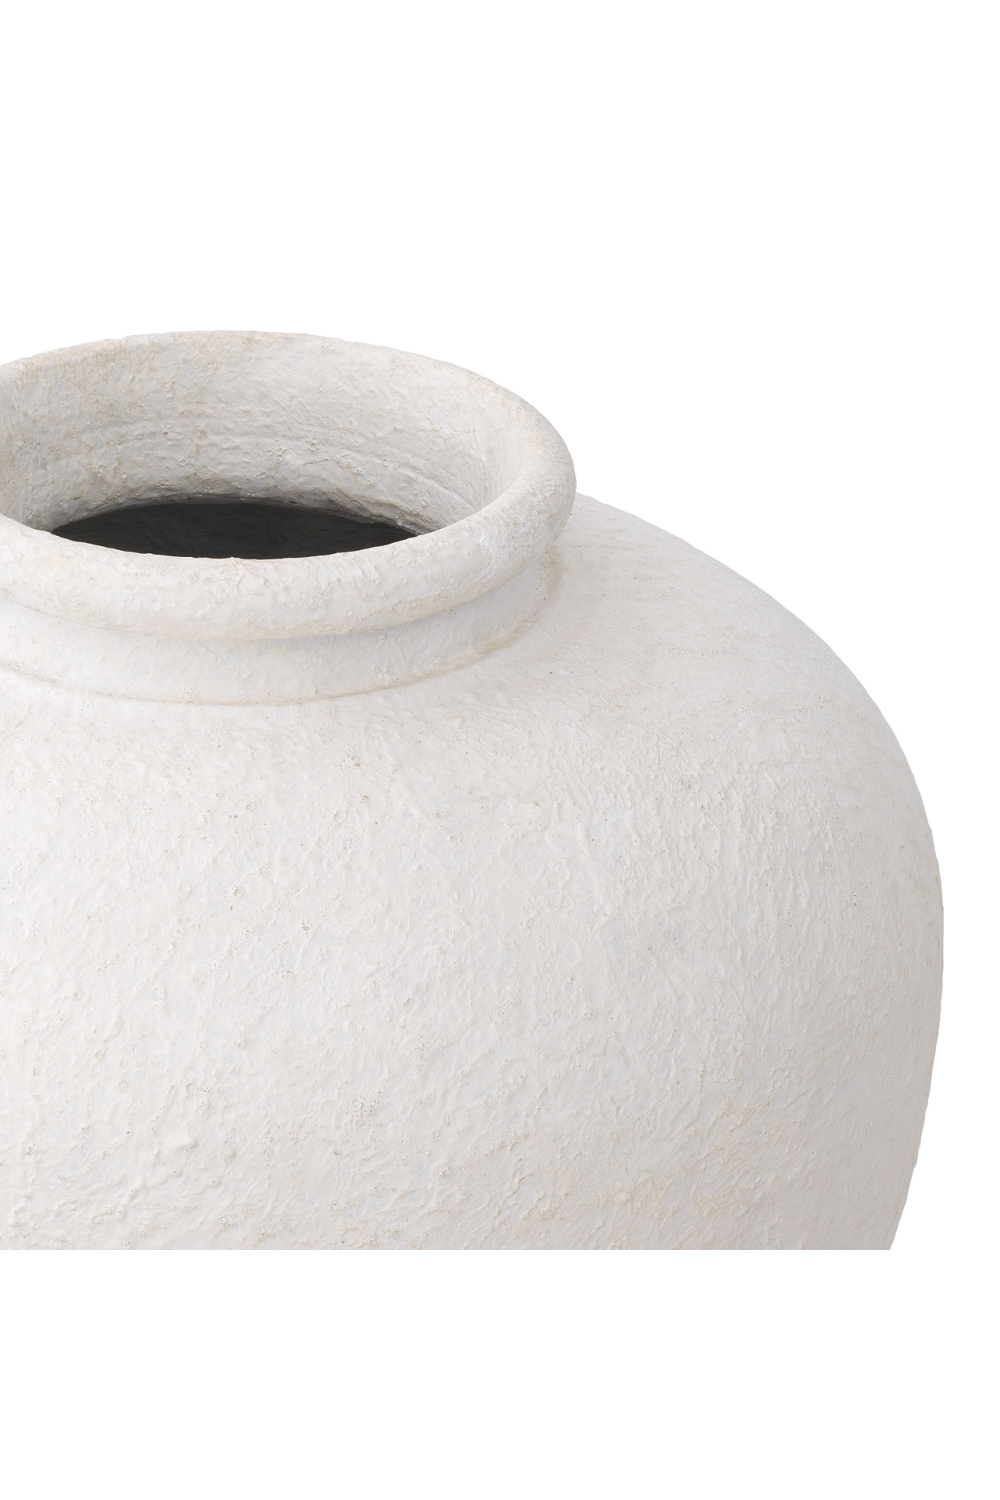 Matte White Clay Vase | Eichholtz Reine L | OROA